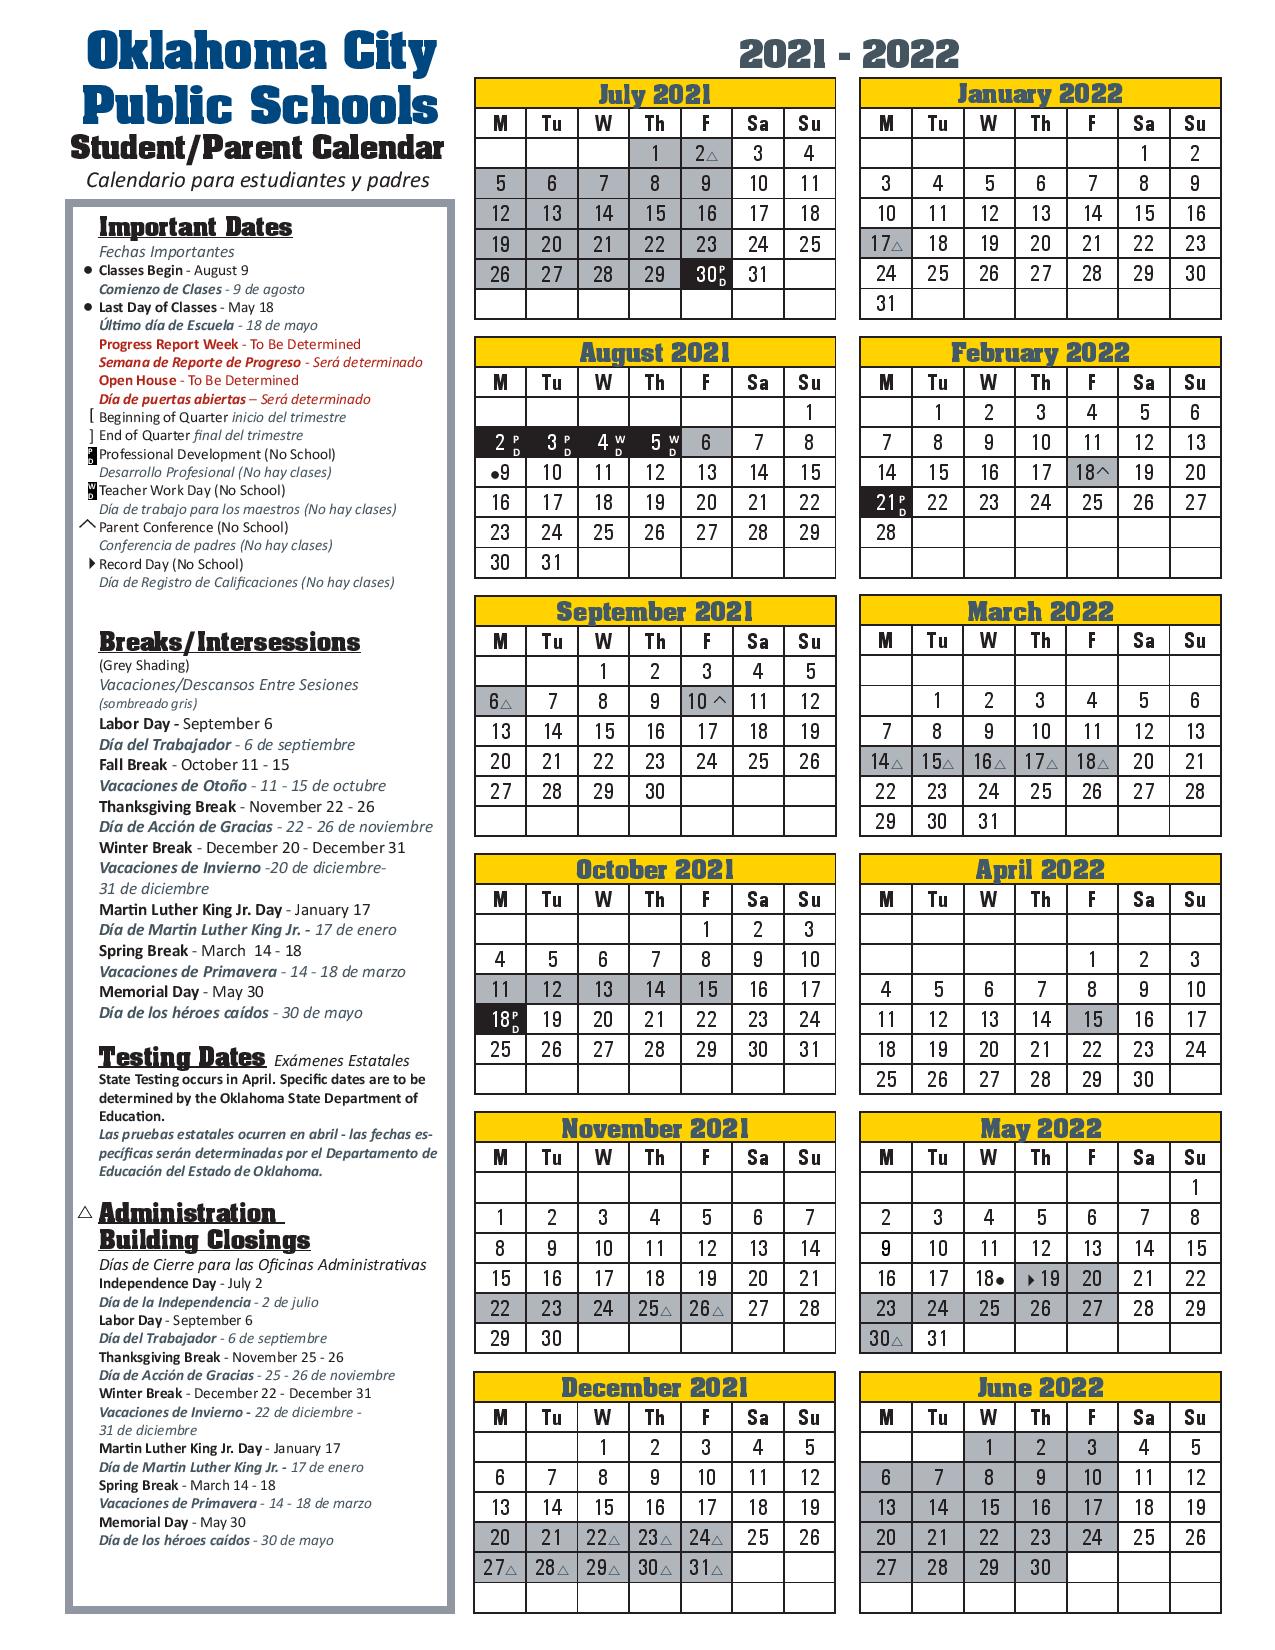 Oklahoma State Spring 2022 Calendar Oklahoma City Public Schools Calendar 2021-2022 In Pdf